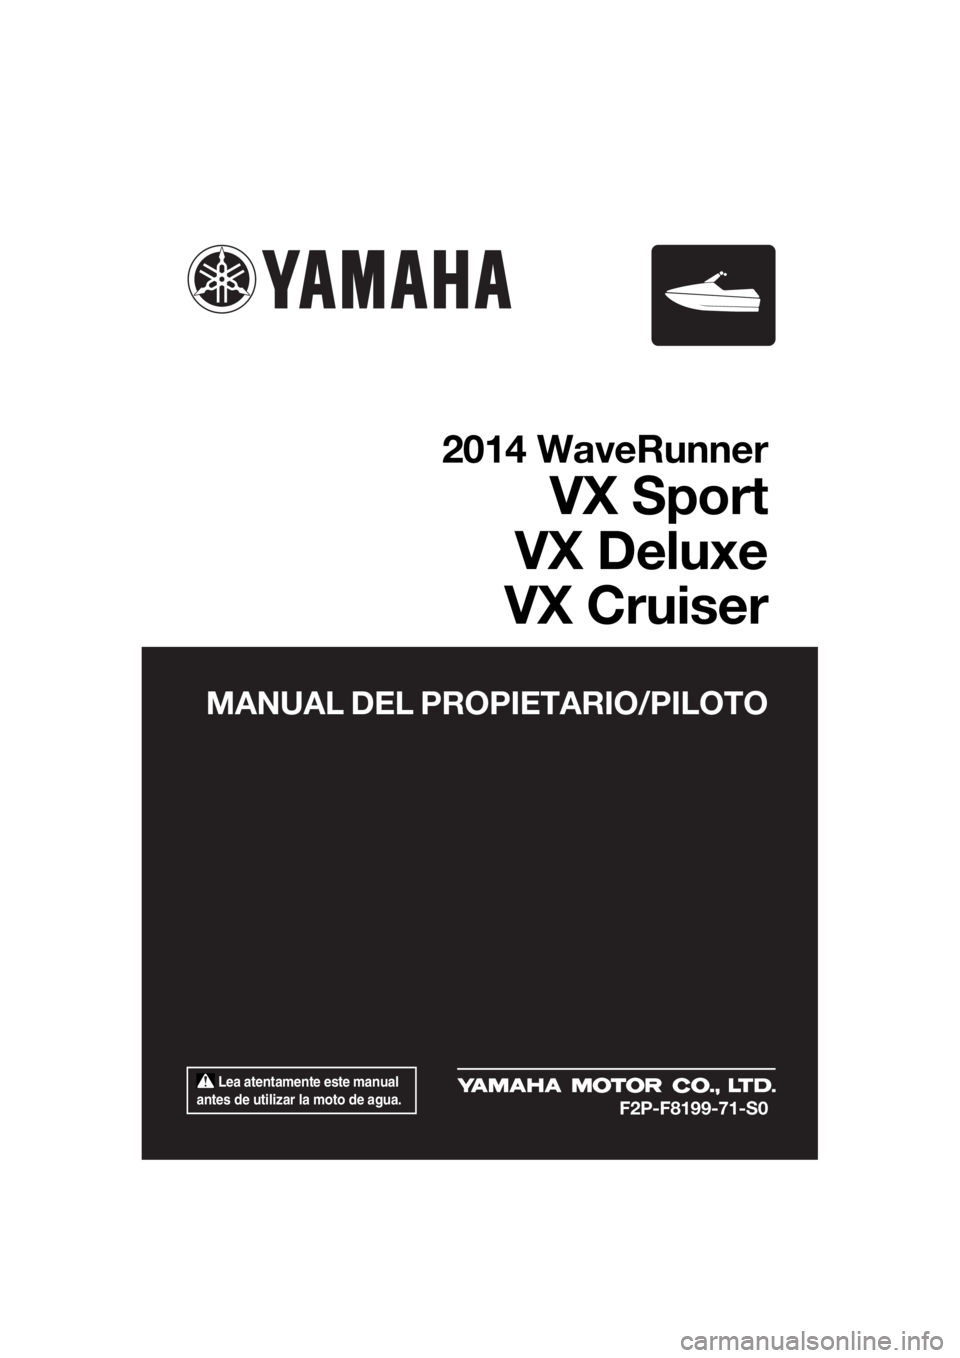 YAMAHA VX 2014  Manuale de Empleo (in Spanish)  Lea atentamente este manual 
antes de utilizar la moto de agua.
MANUAL DEL PROPIETARIO/PILOTO
2014 WaveRunner
VX Sport
VX Deluxe
VX Cruiser
F2P-F8199-71-S0
UF2P71S0.book  Page 1  Wednesday, July 10, 